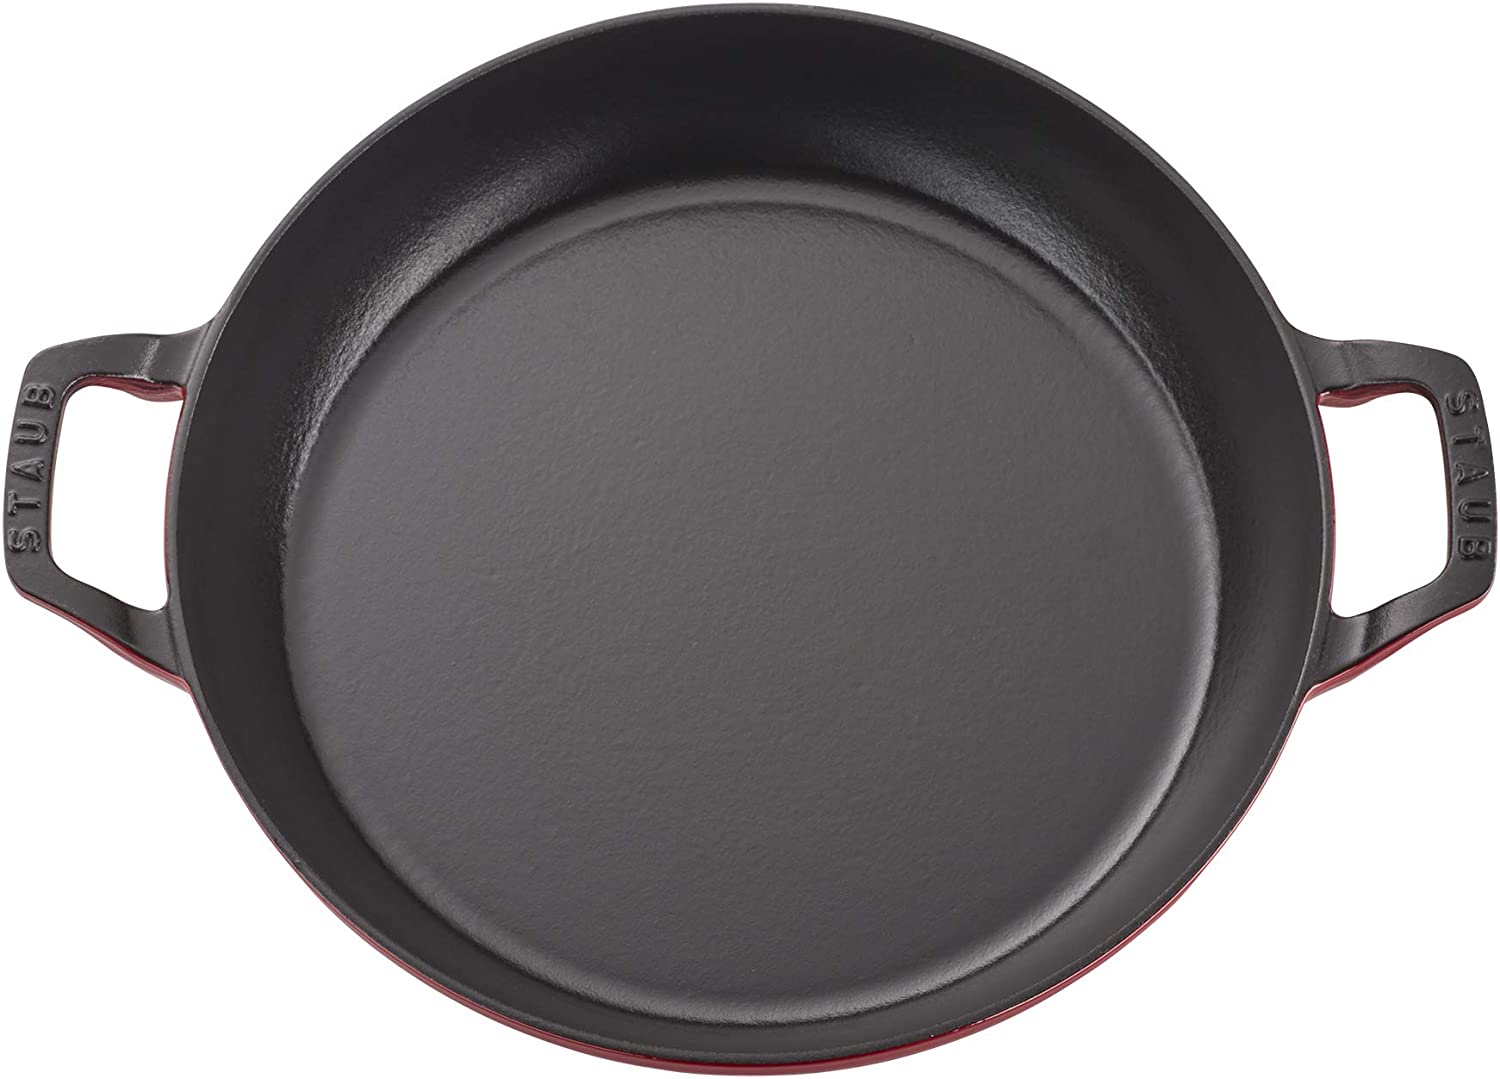 Saute Braiser saucepan, cast iron, 24cm/2,4L, Black - Staub